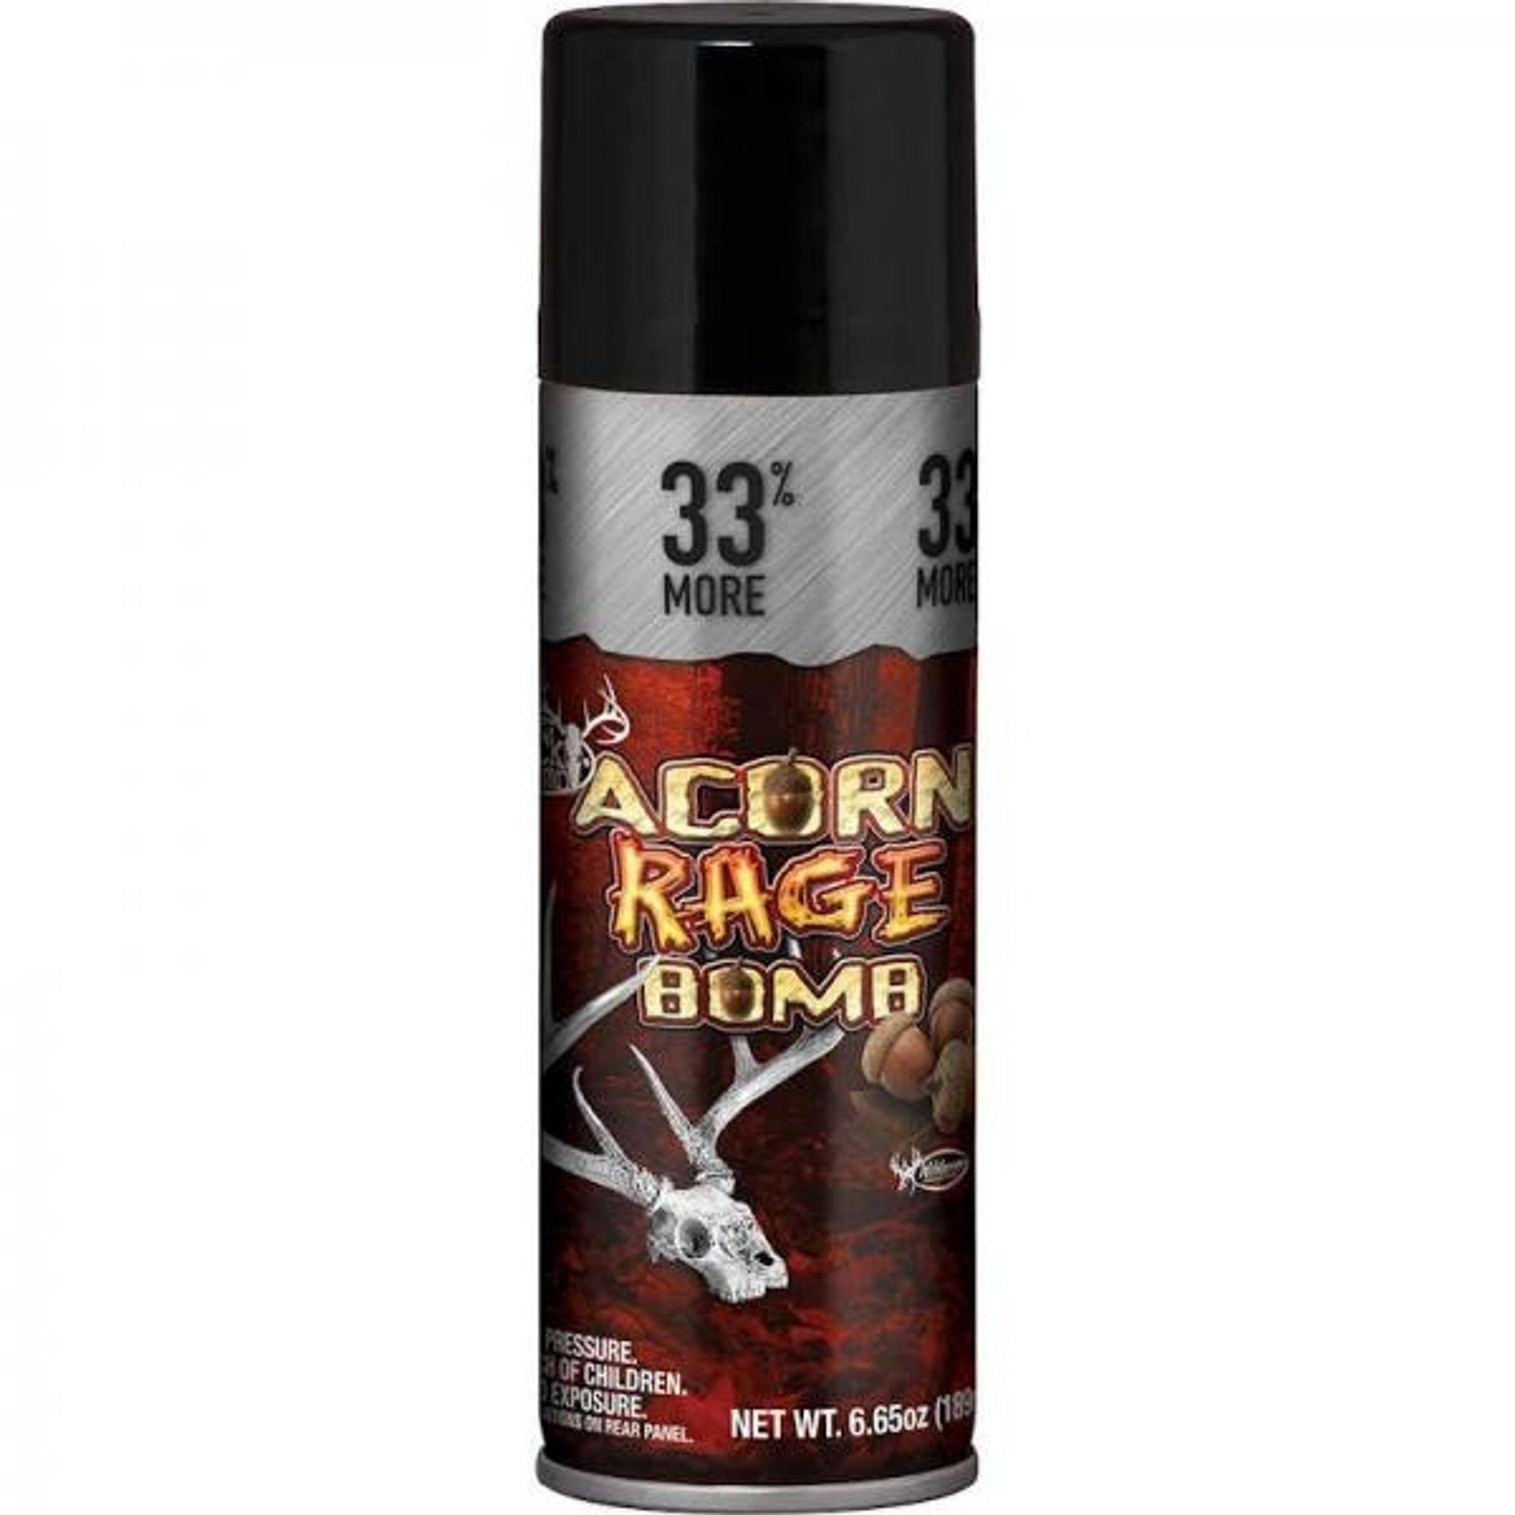 Acorn Rage Buck Bomb 33% More